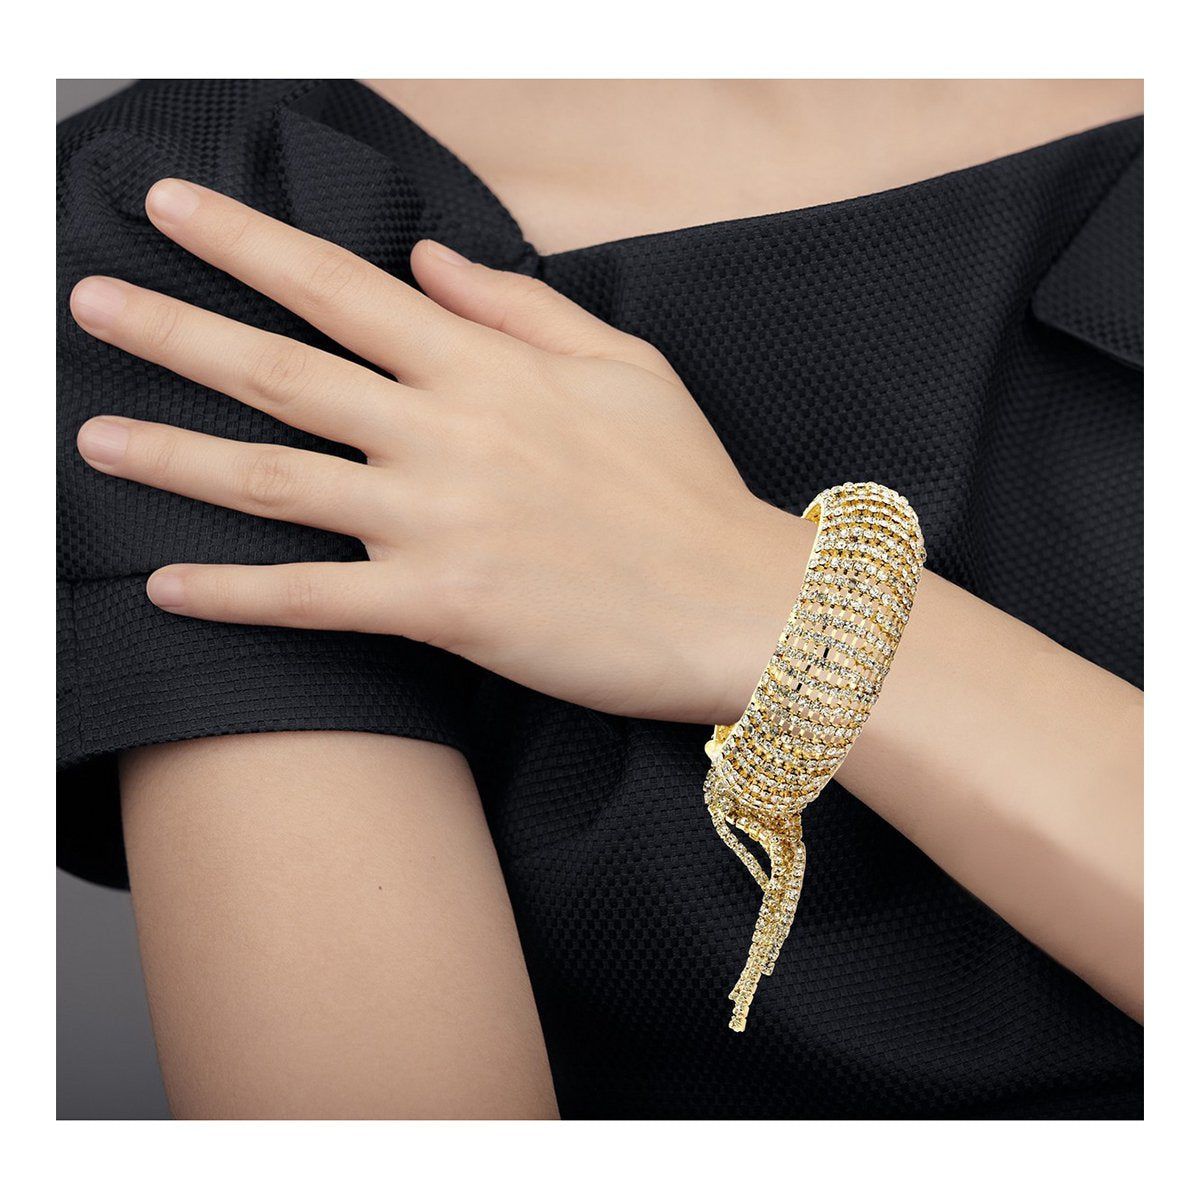 Jewwel Delicated Bangle Set with High Gold Polished Bracelet  Bangles